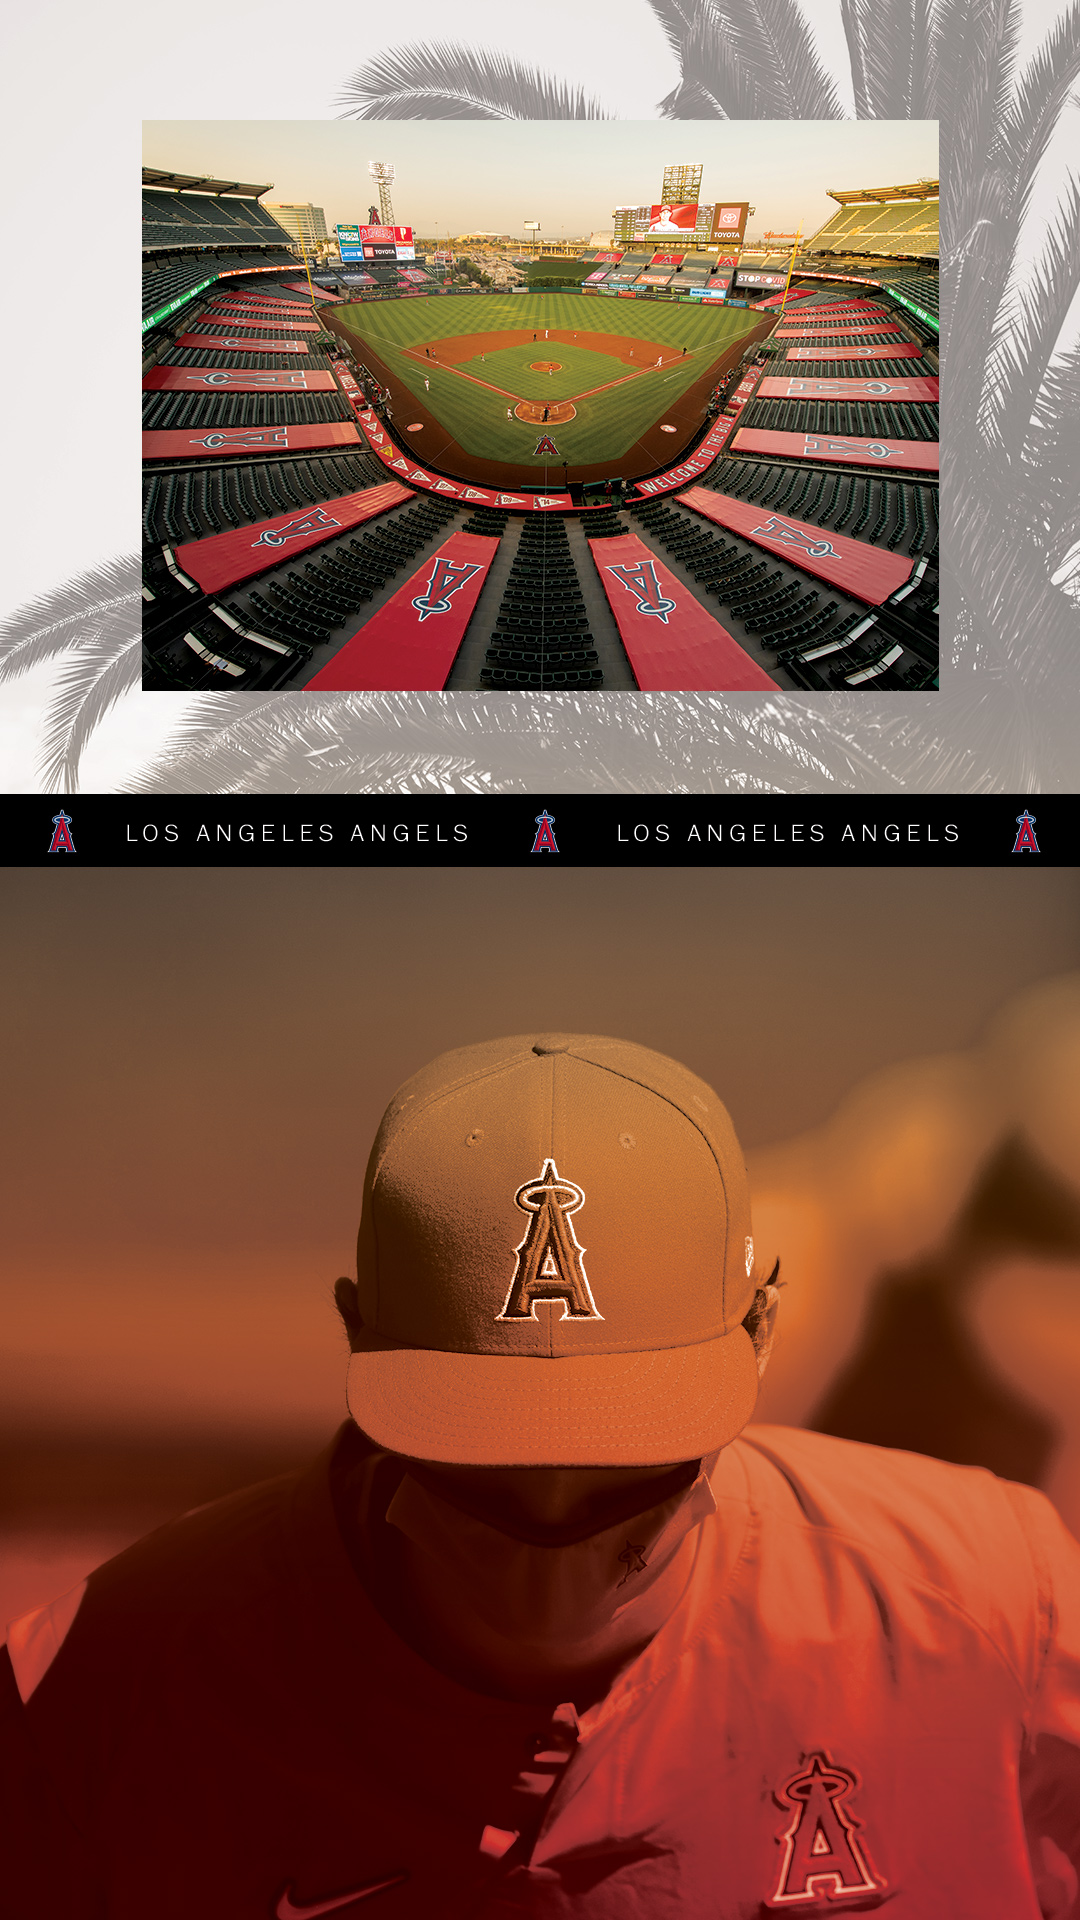 100+] Los Angeles Angels Wallpapers